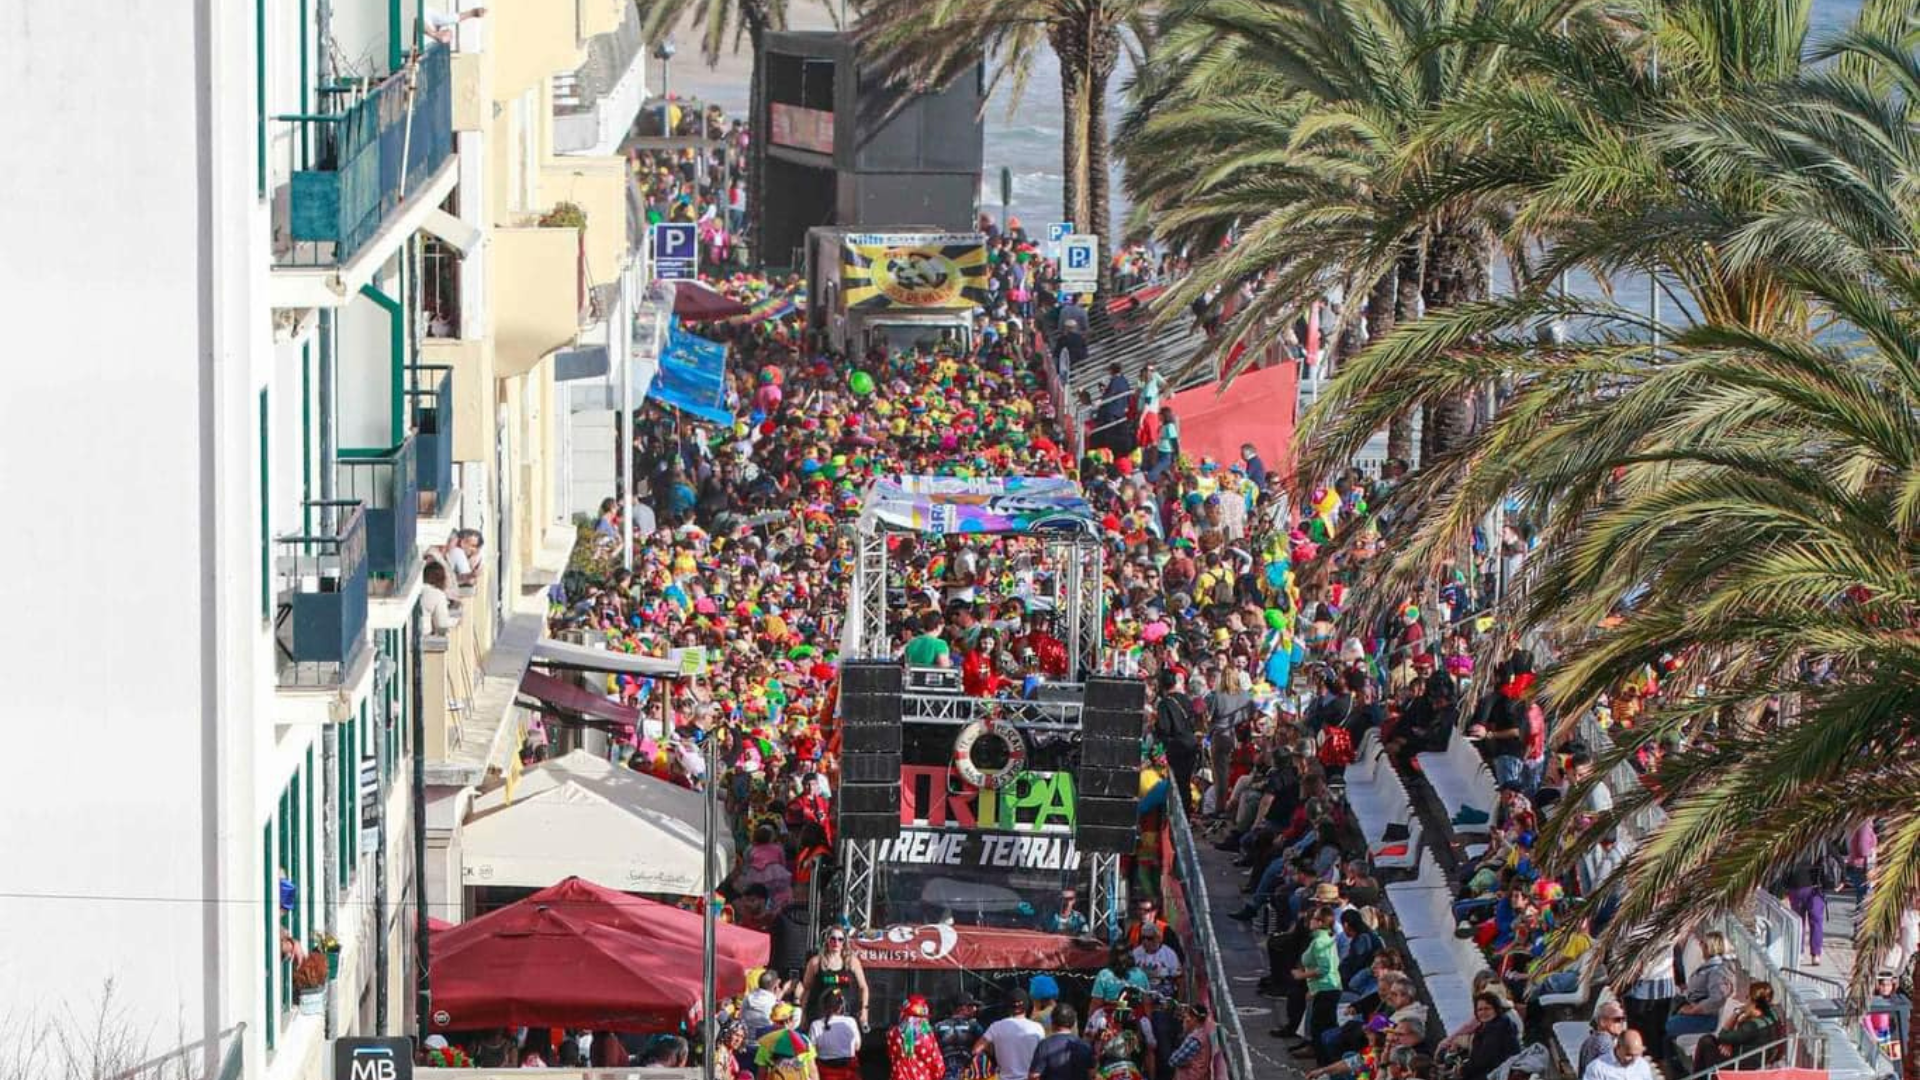 2024 "Carnaval de Sesimbra"